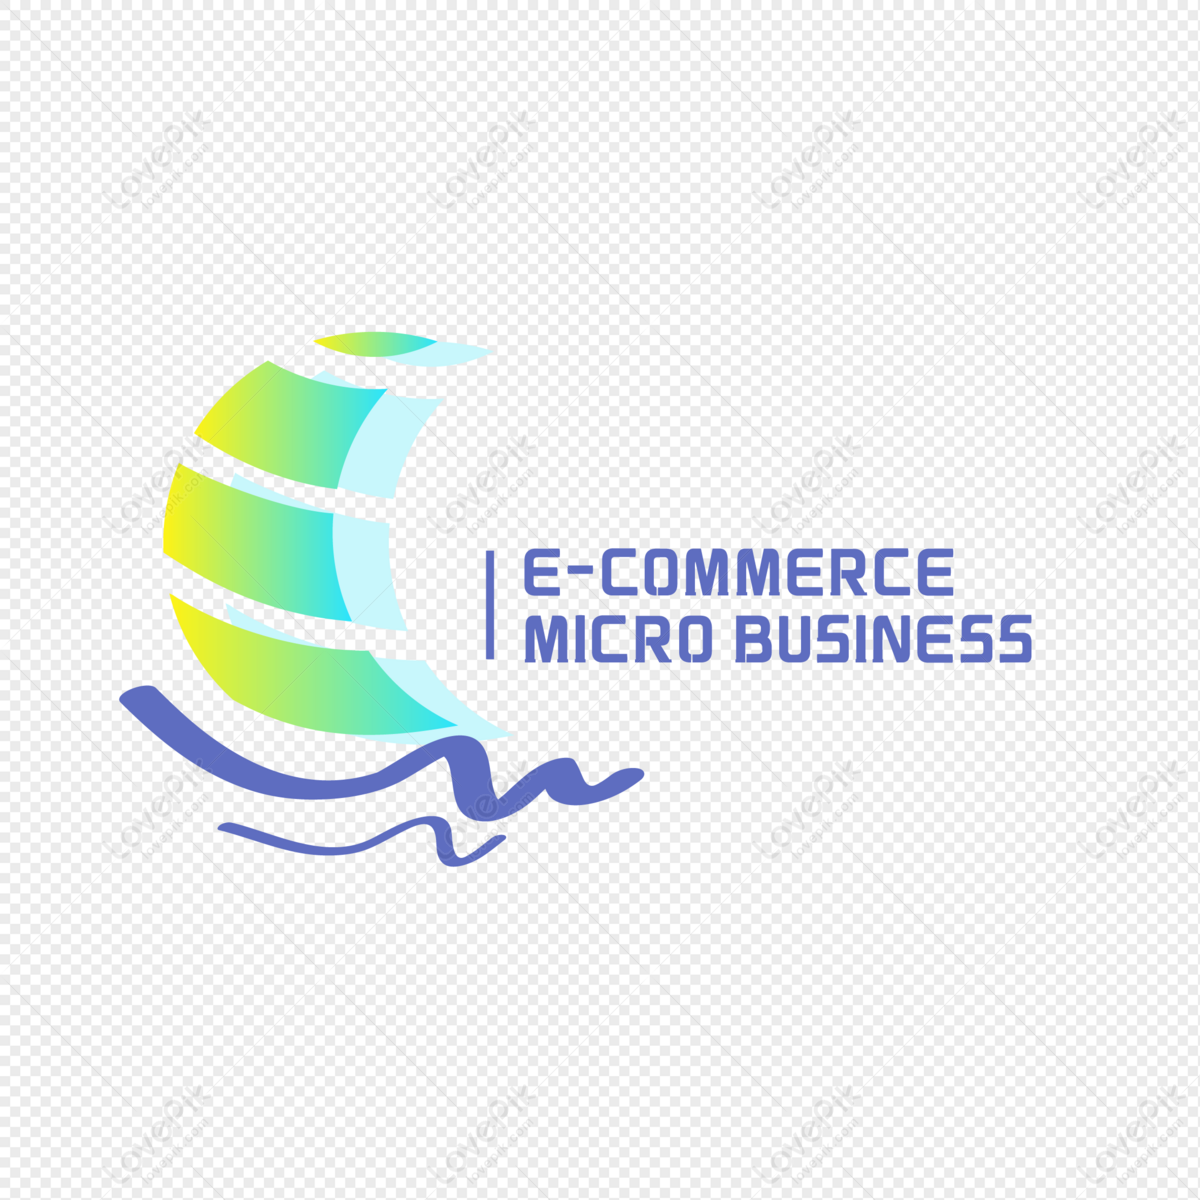 SPS Commerce Vector Logo - Download Free SVG Icon | Worldvectorlogo